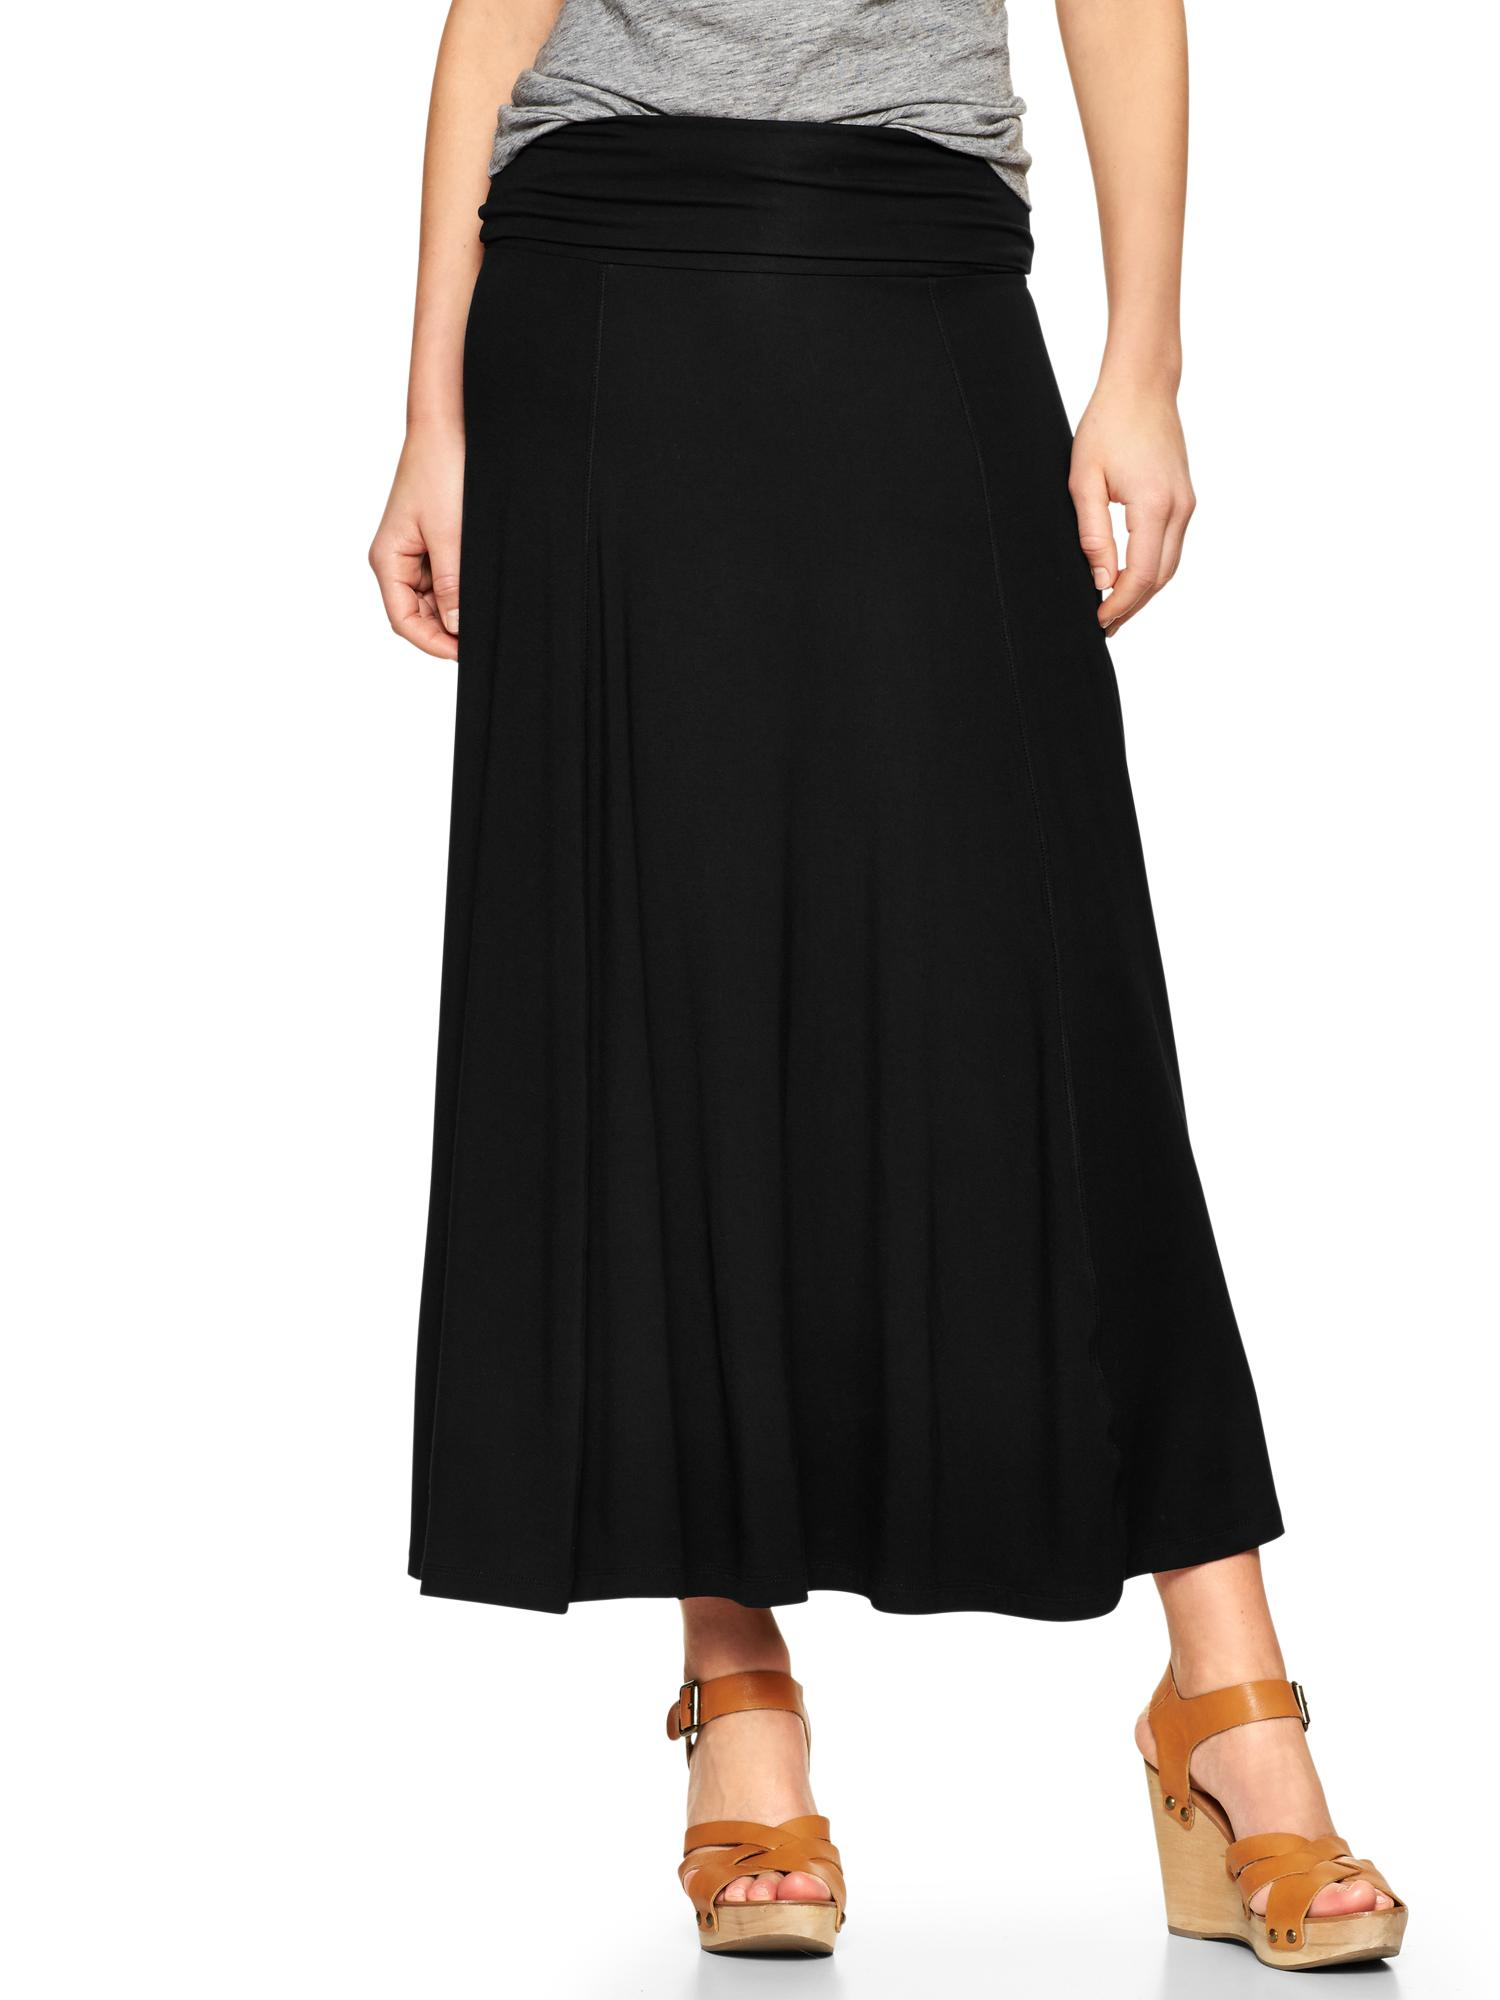 Gap Foldover Maxi Skirt in Black - Lyst